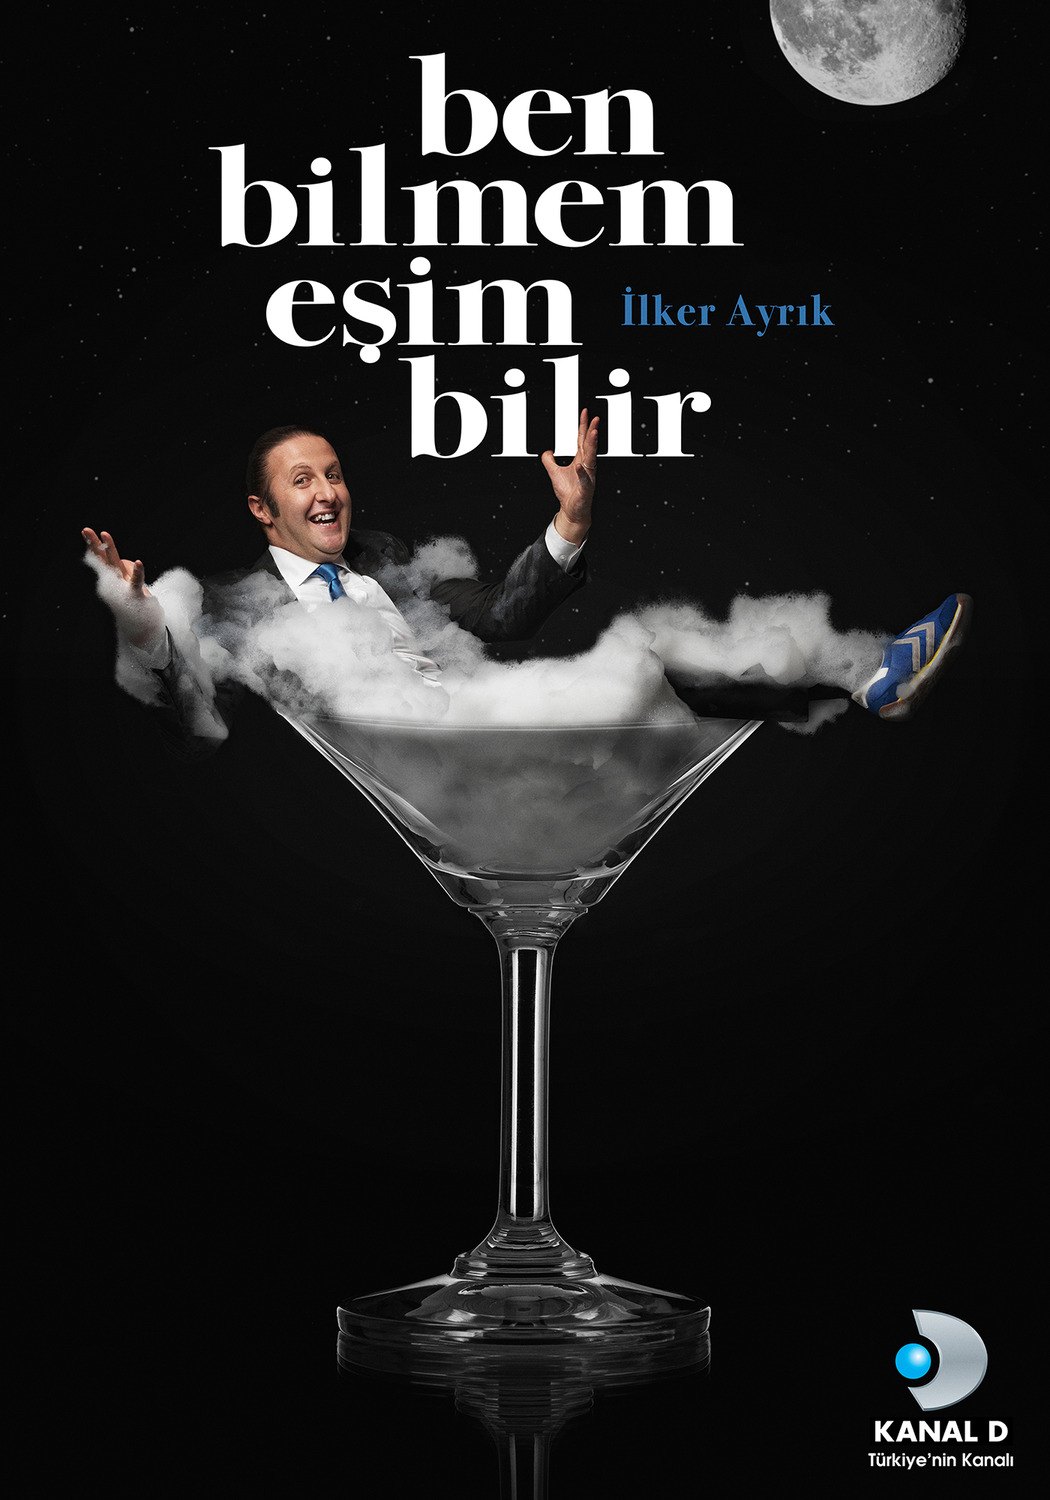 Extra Large TV Poster Image for Ben bilmem esim bilir (#4 of 4)